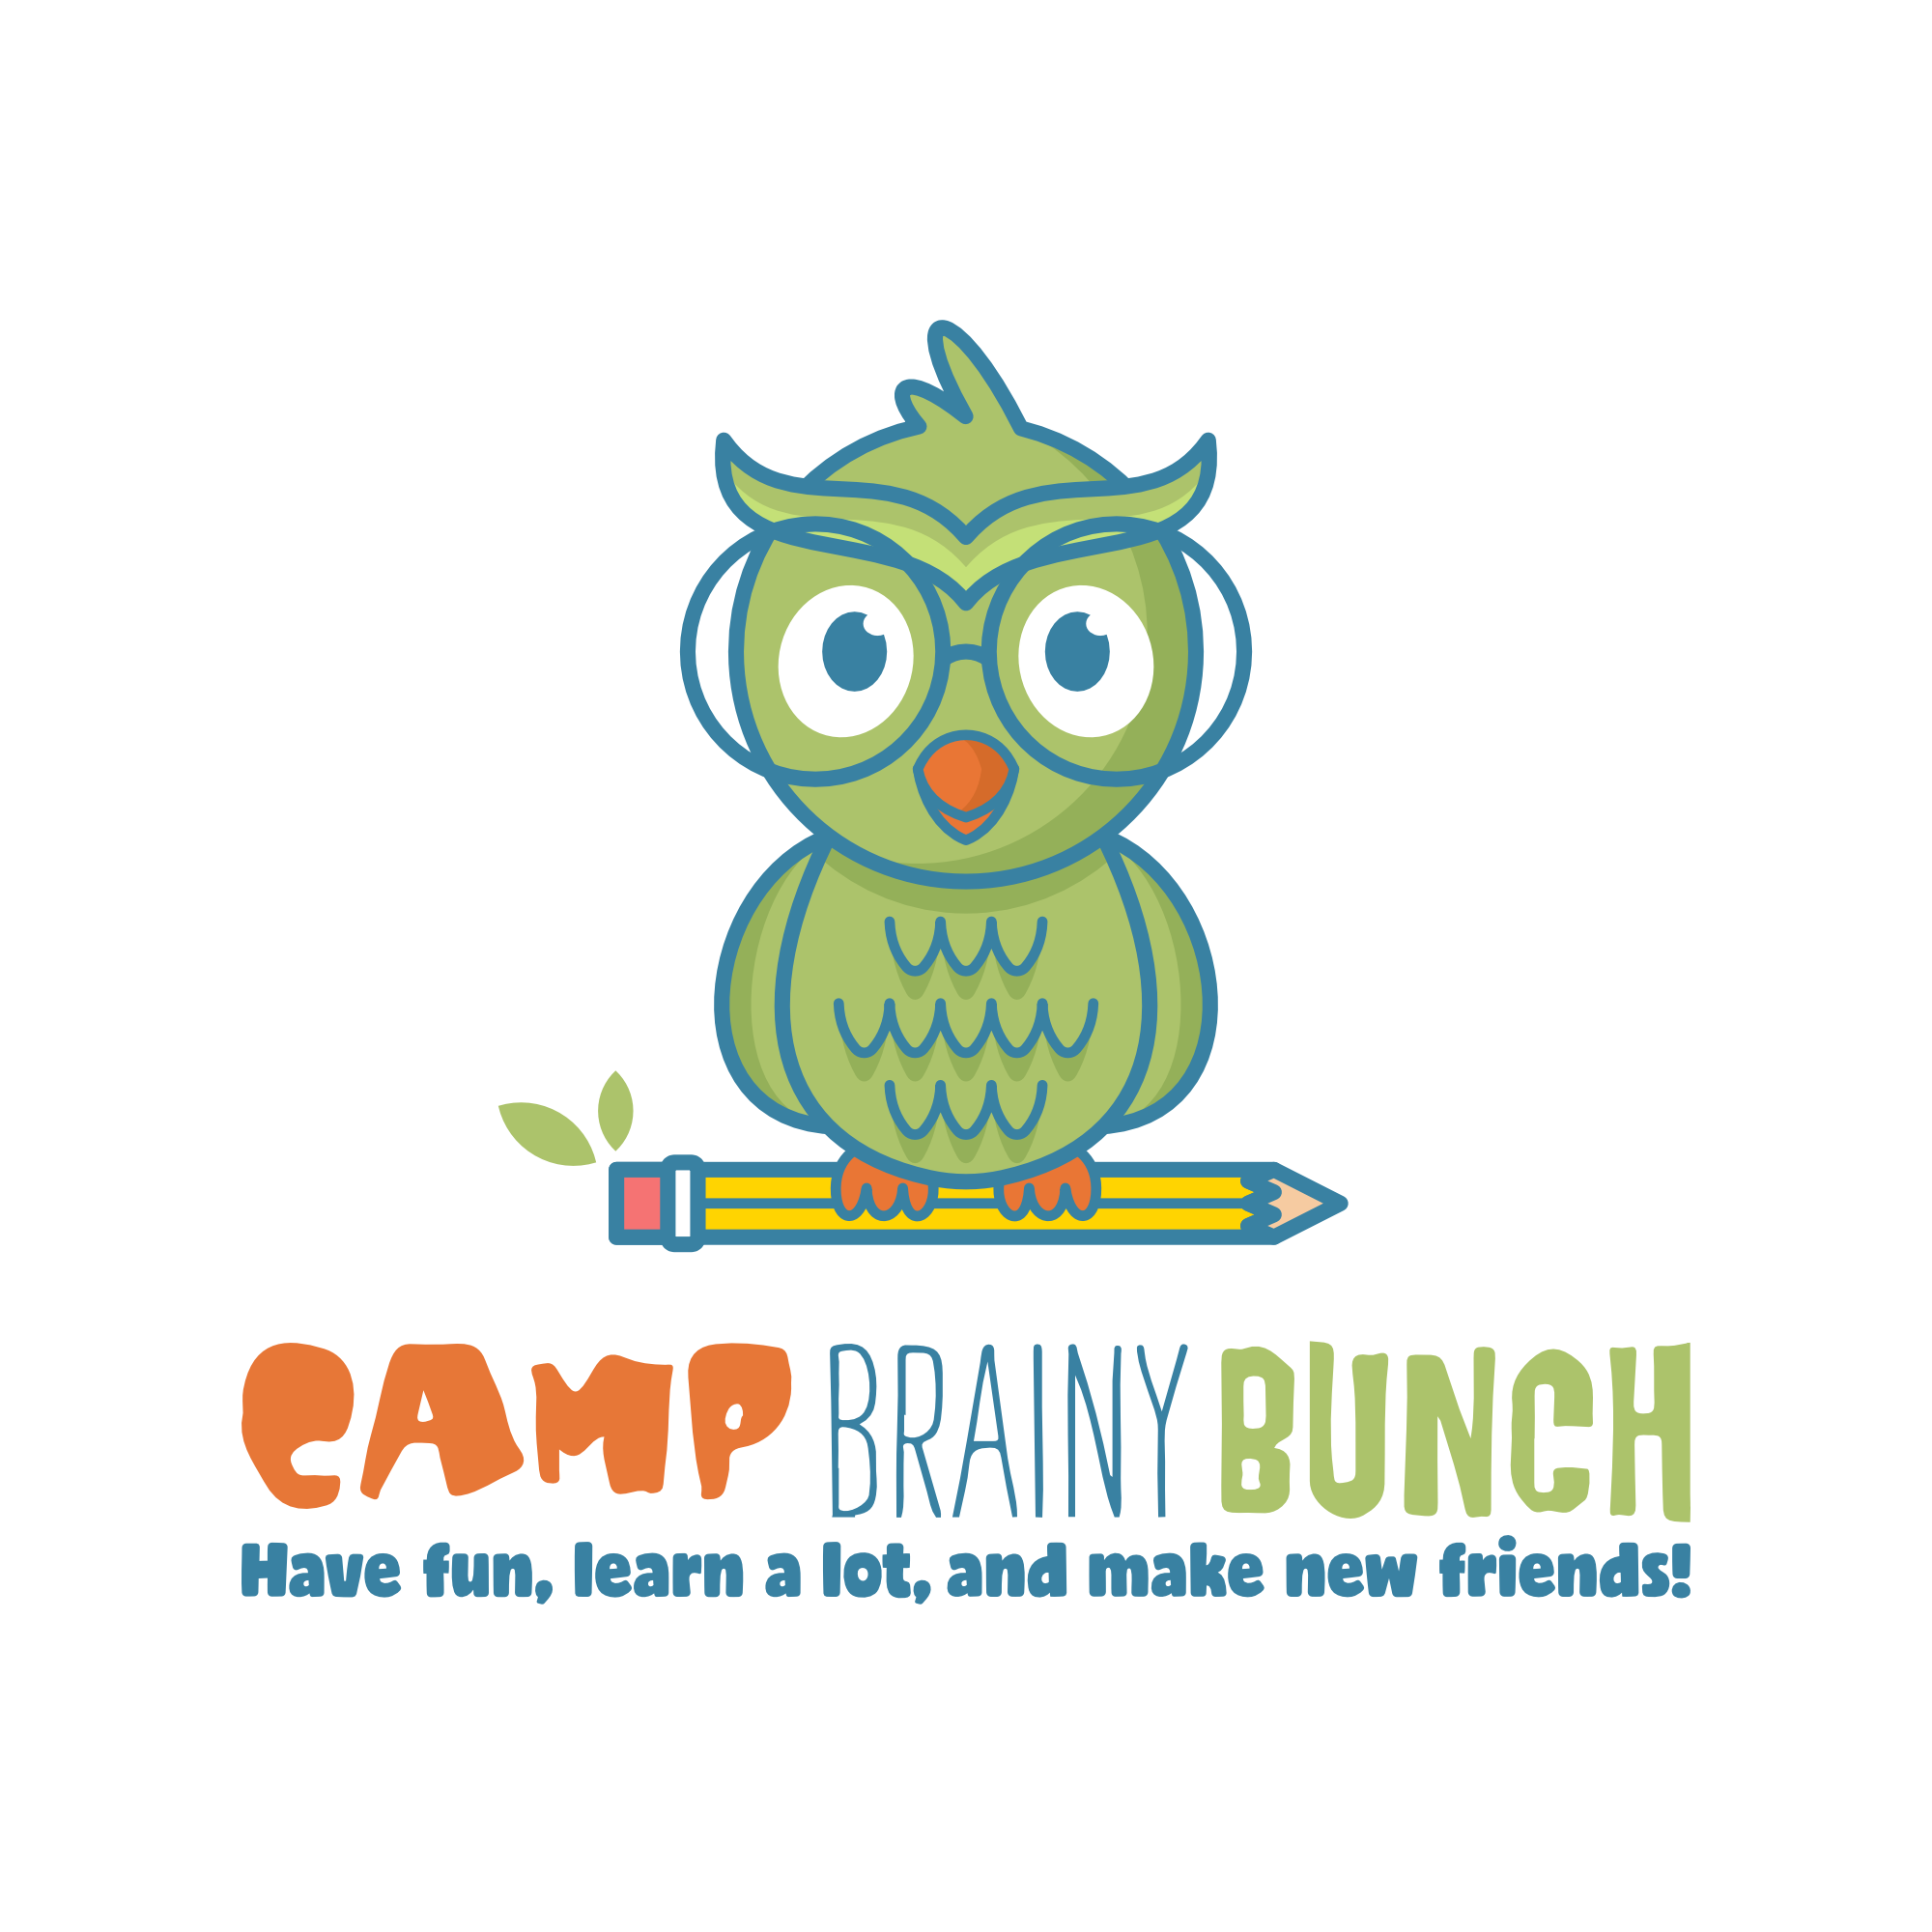 Camp Brainy Bunch